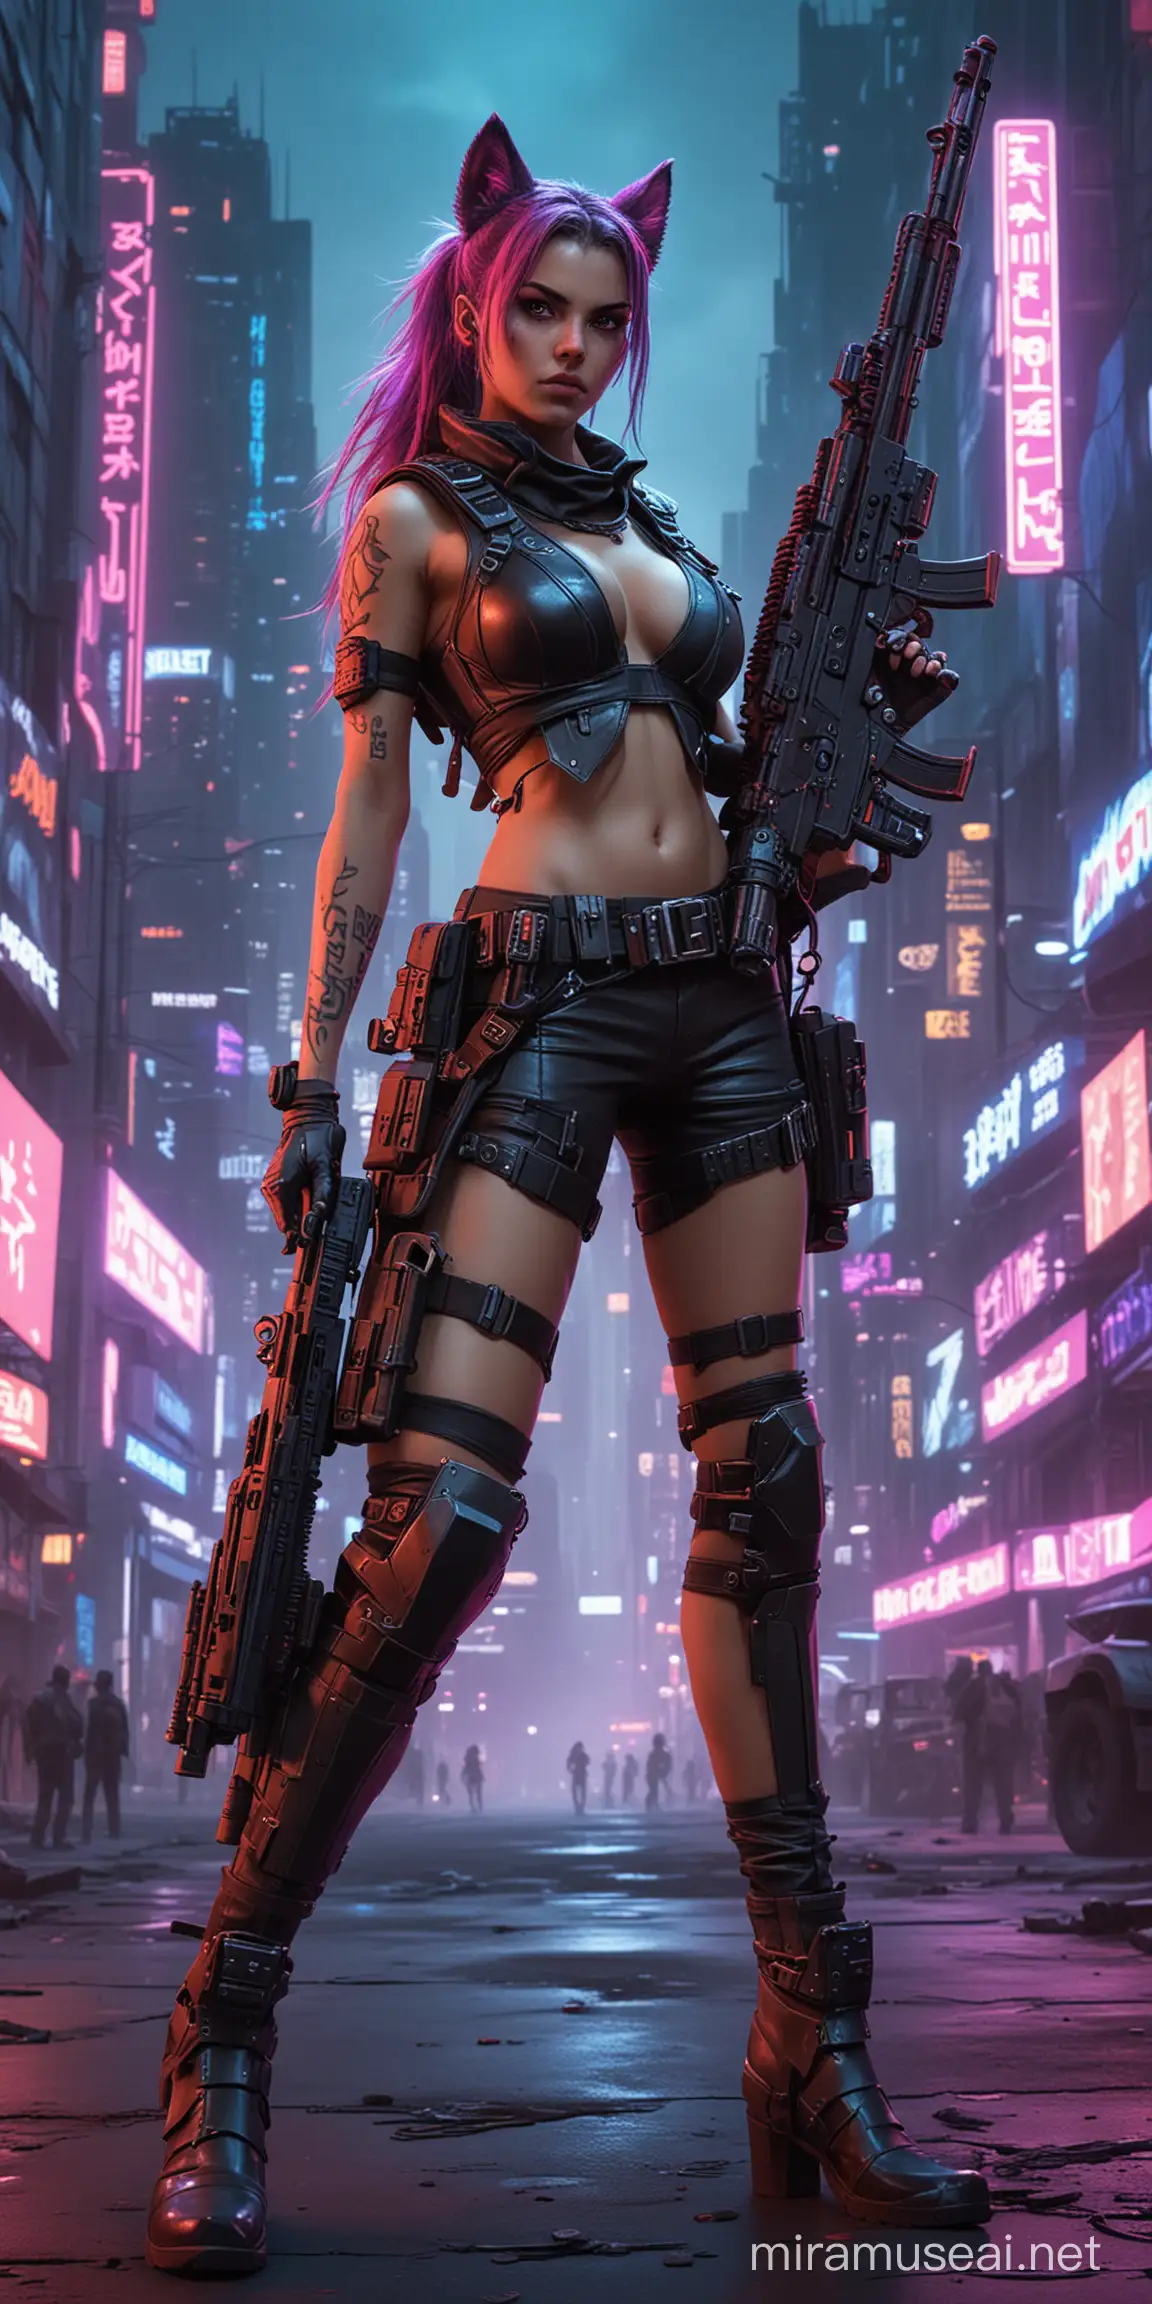 Neon Cyberpunk Wolfgirl Mercenary with Rifle